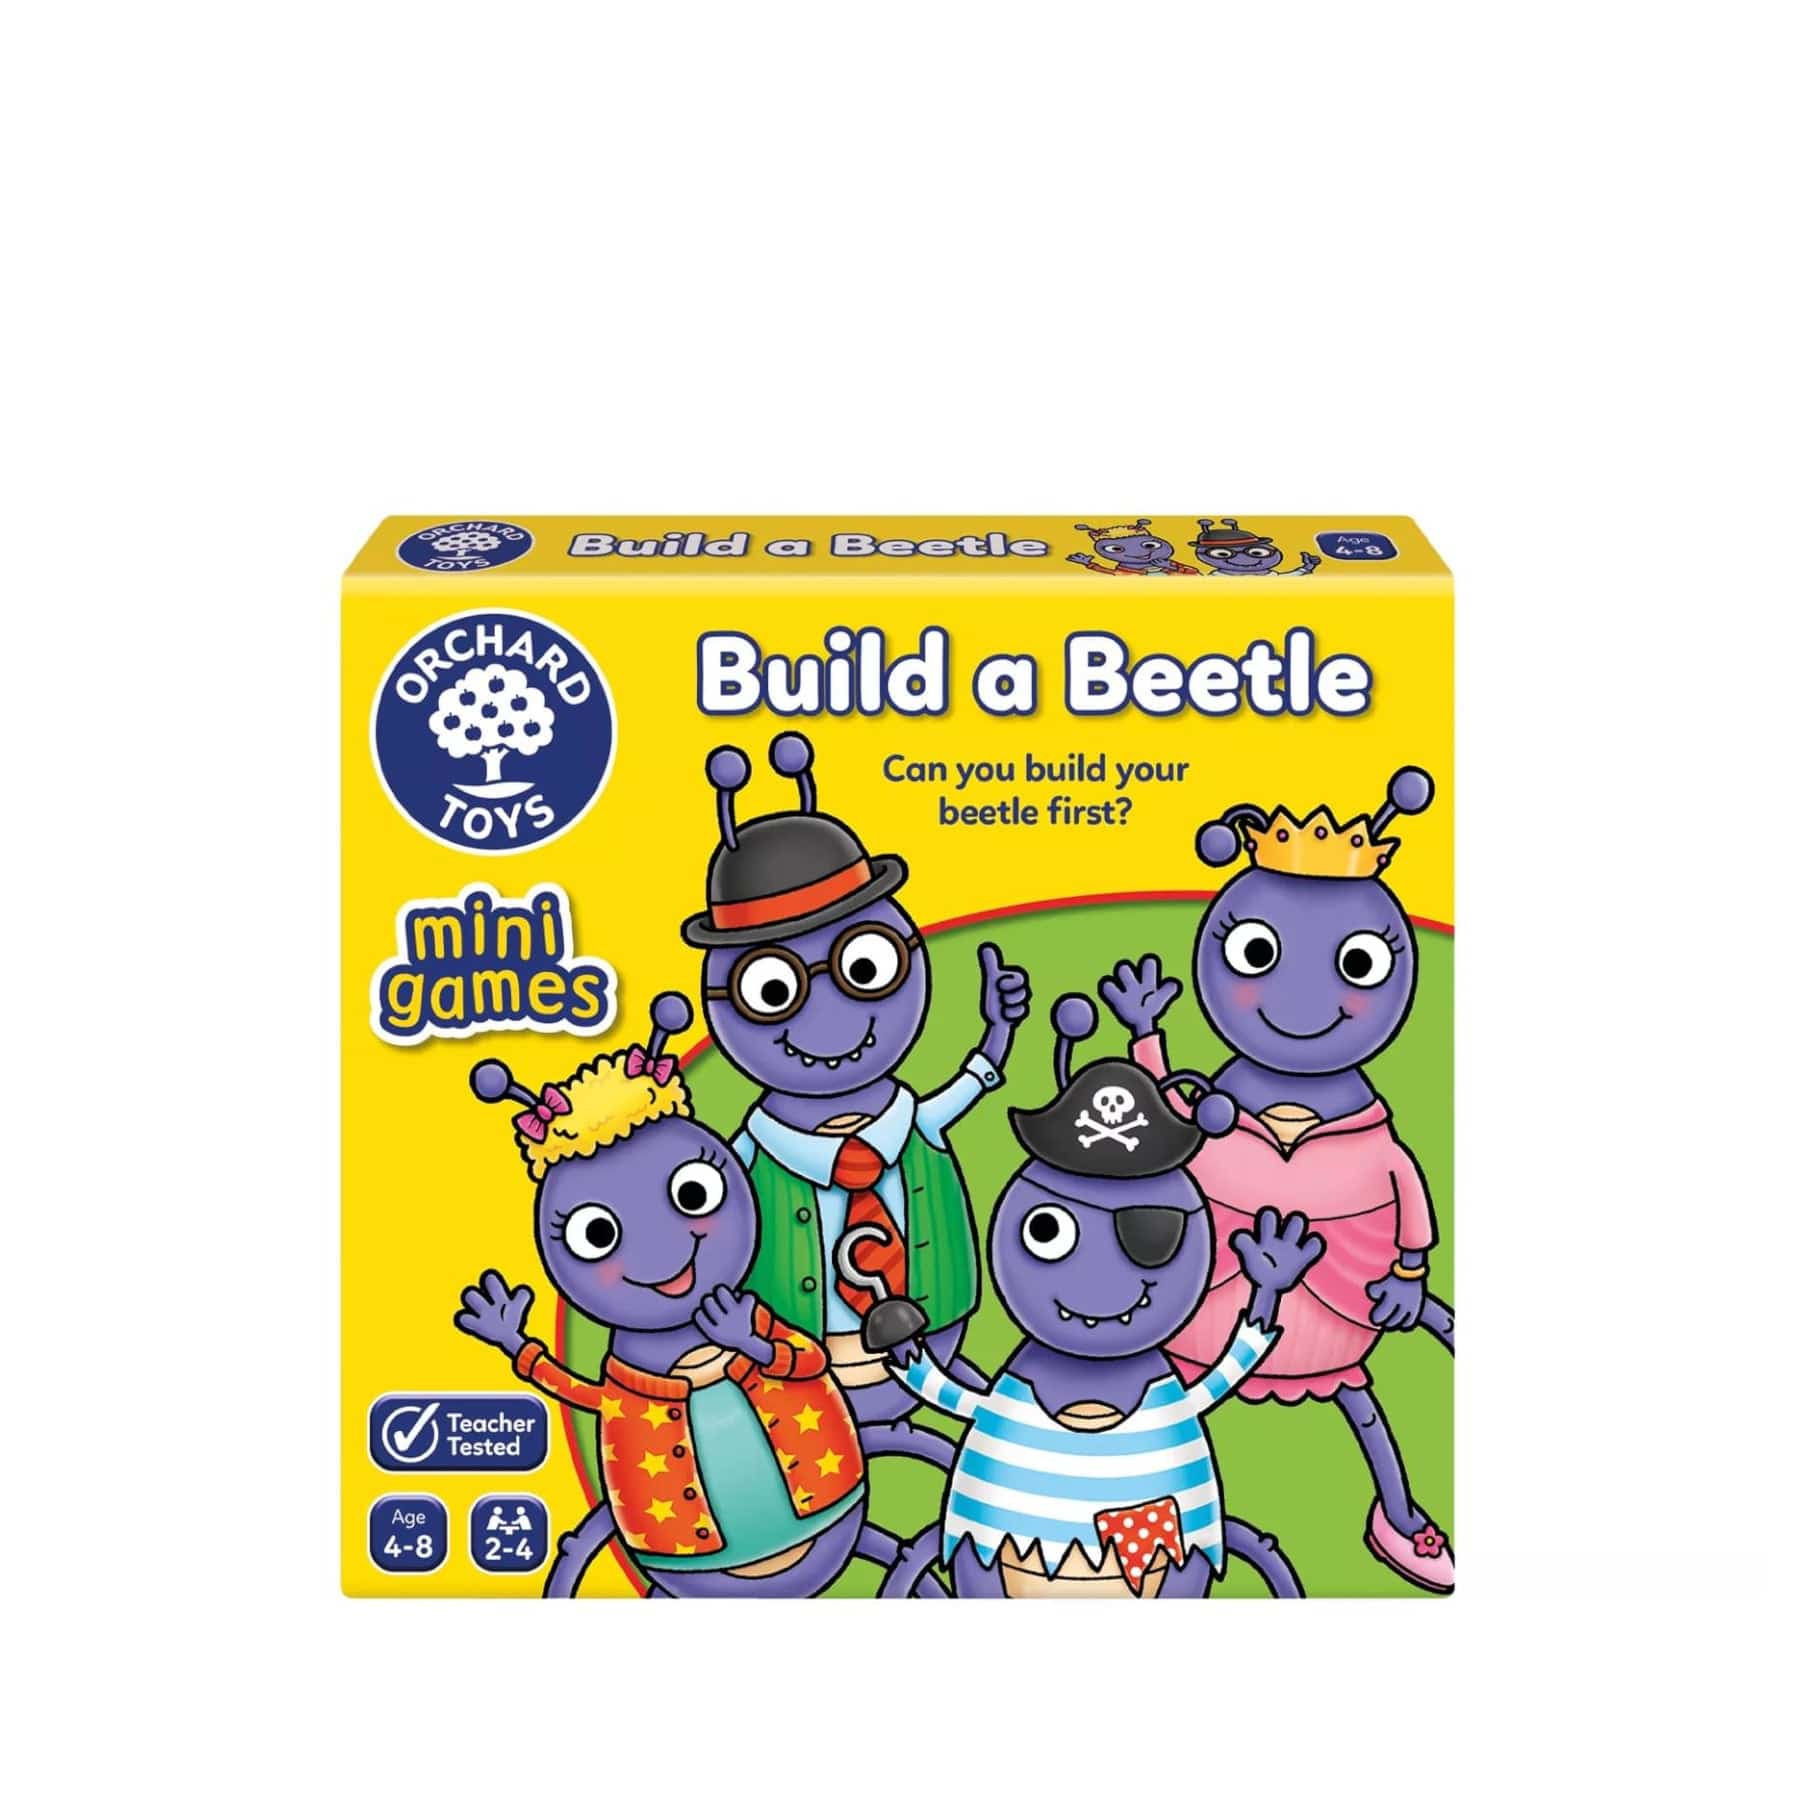 Build a beetle mini game